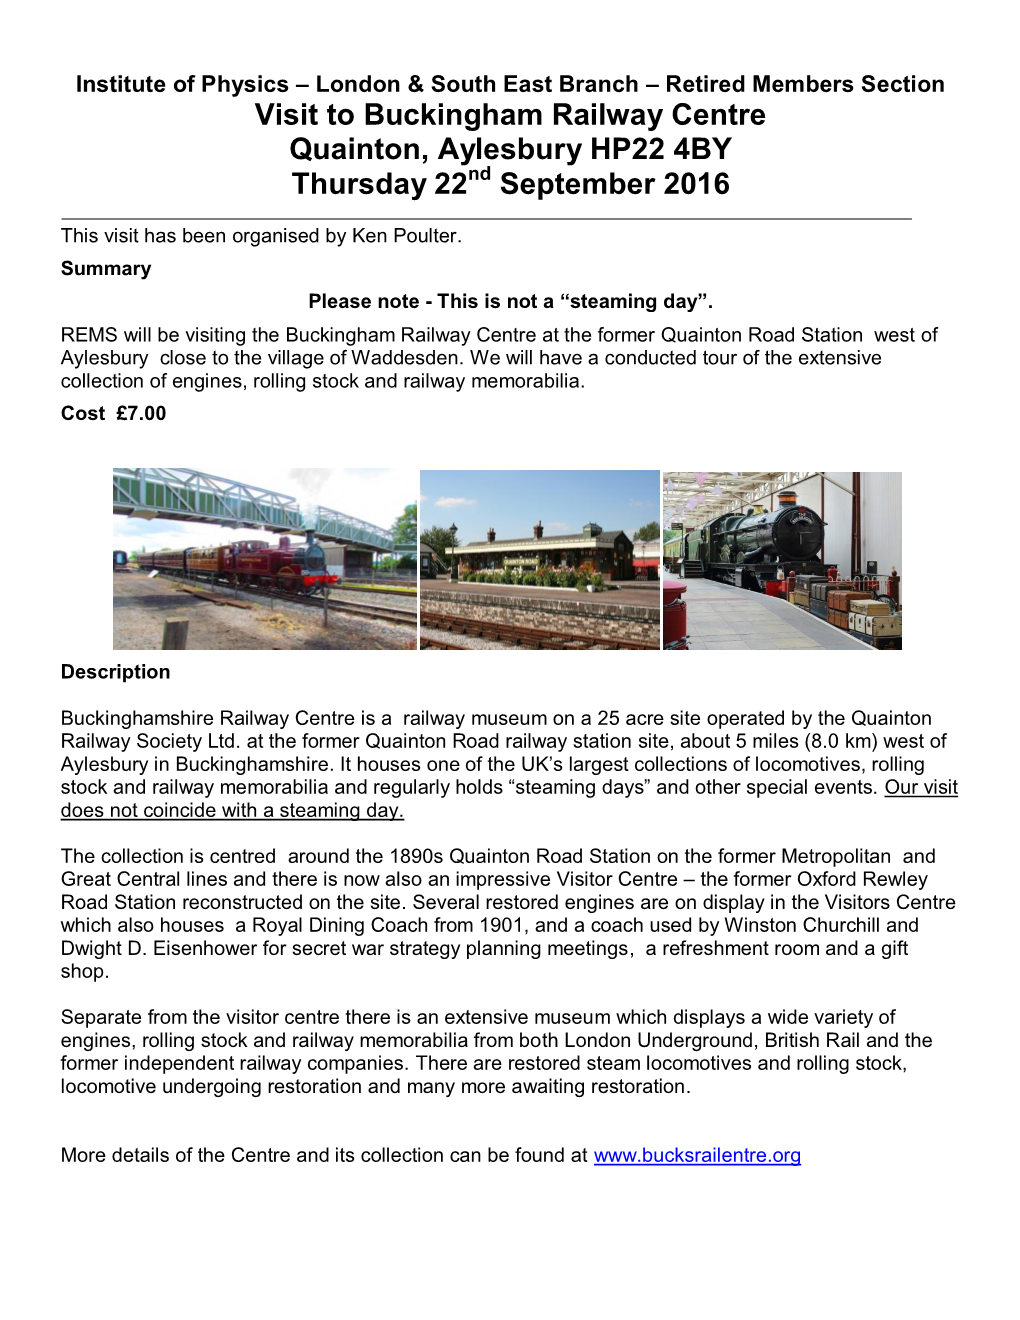 Visit to Buckingham Railway Centre Quainton, Aylesbury HP22 4BY Thursday 22Nd September 2016